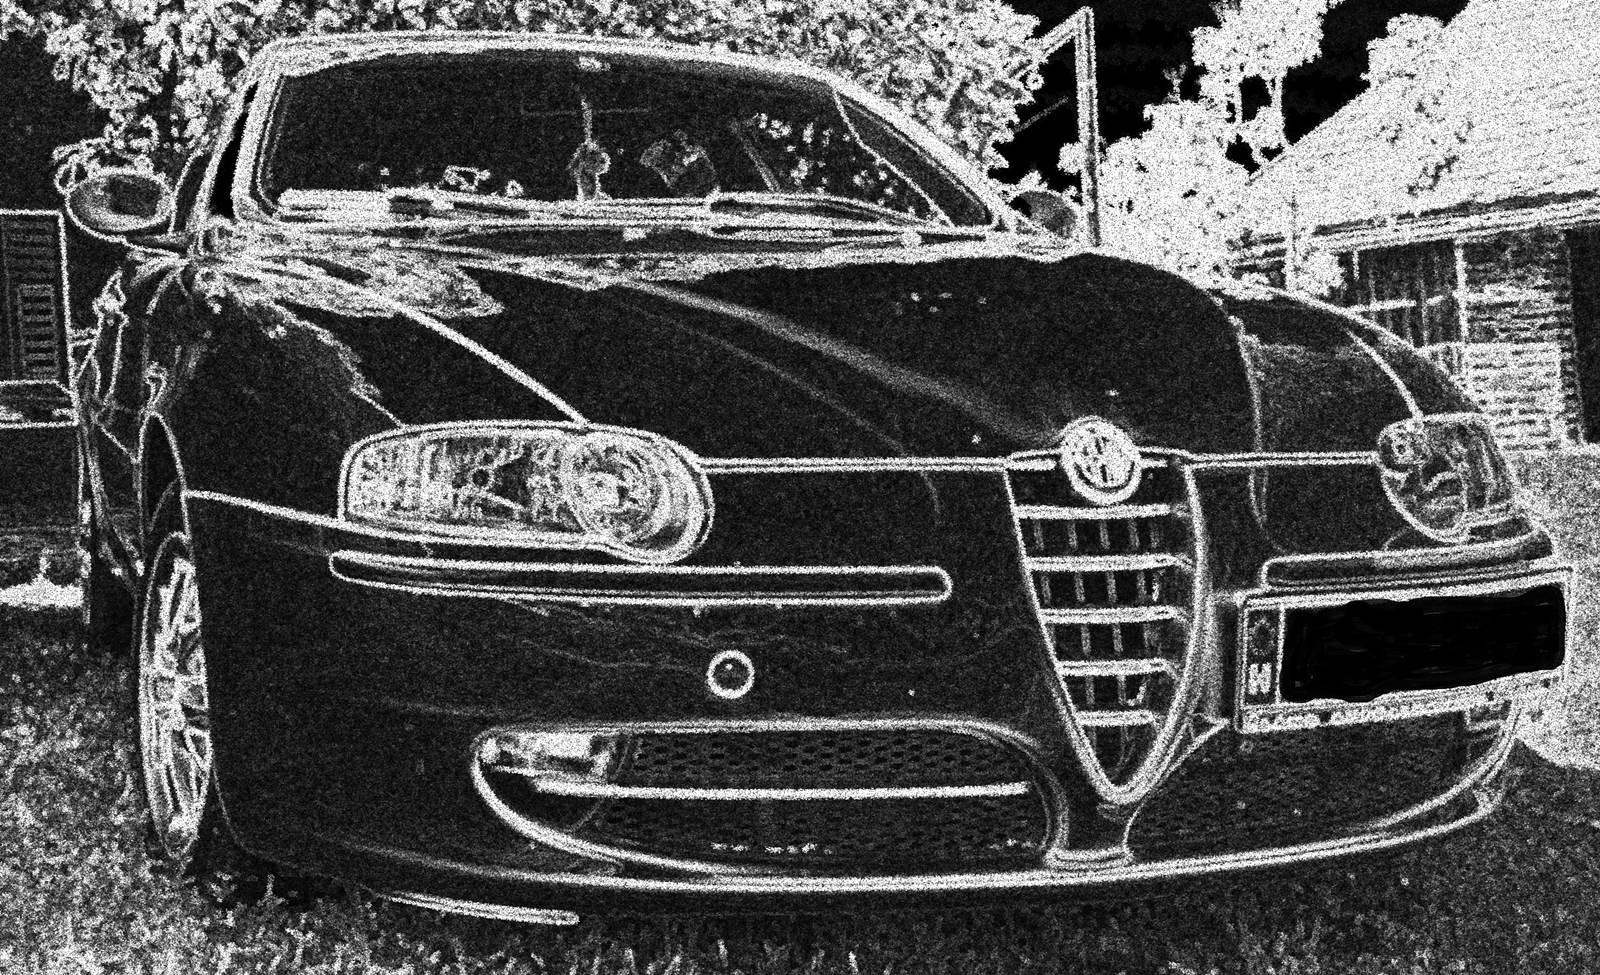 Alfa Romeo 147 Distinctive